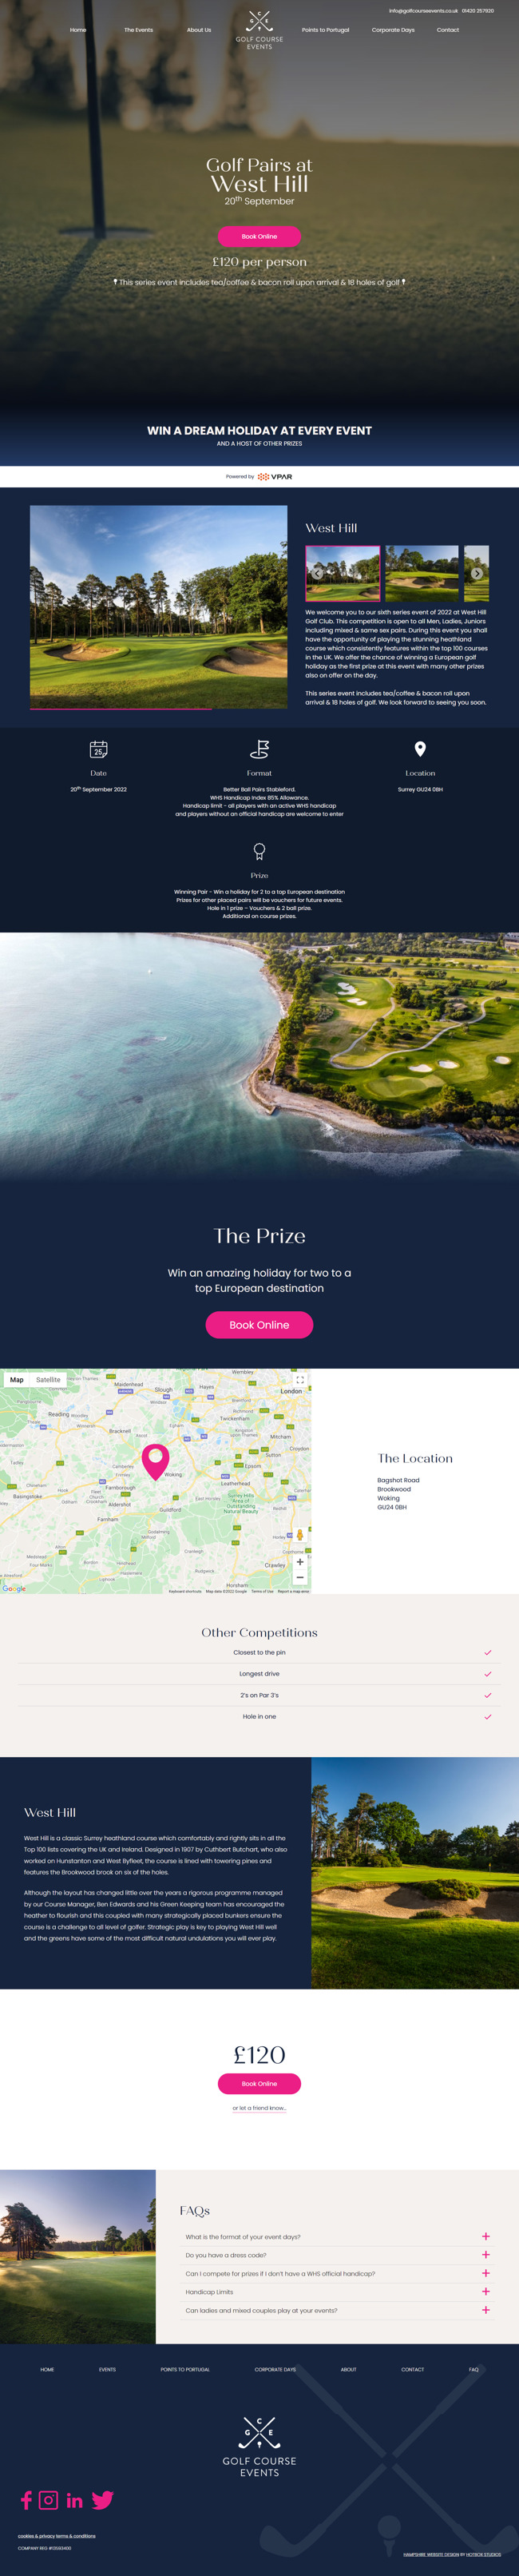 Golf Course Events Website Design And Wordpress Web Development SP008 West Hill